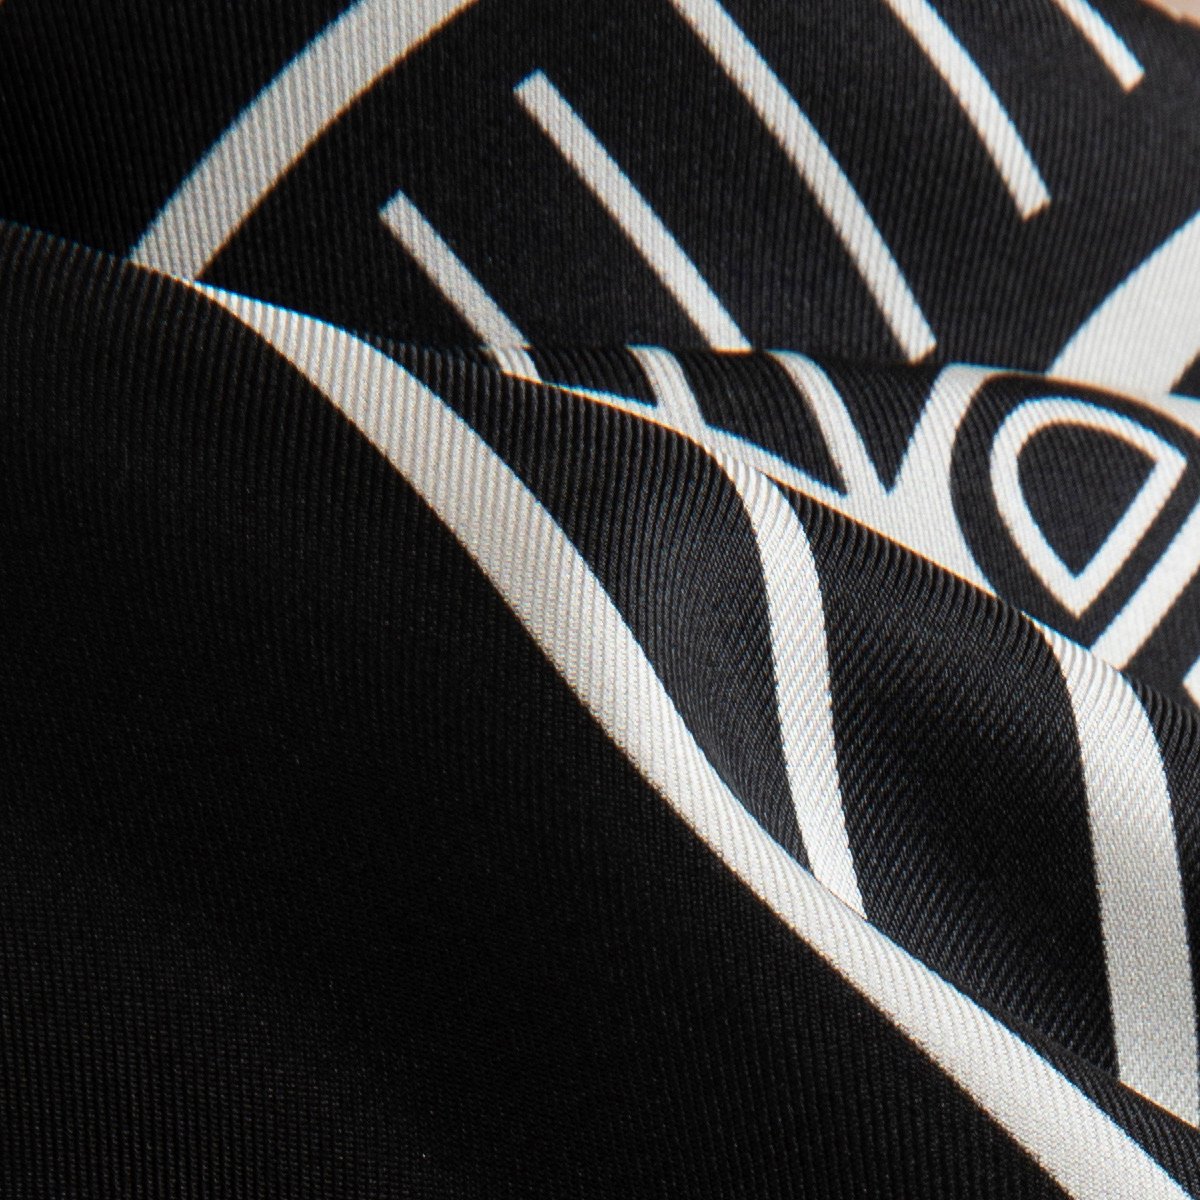 Silk scarf with signature logo print in black by Studio Heijne